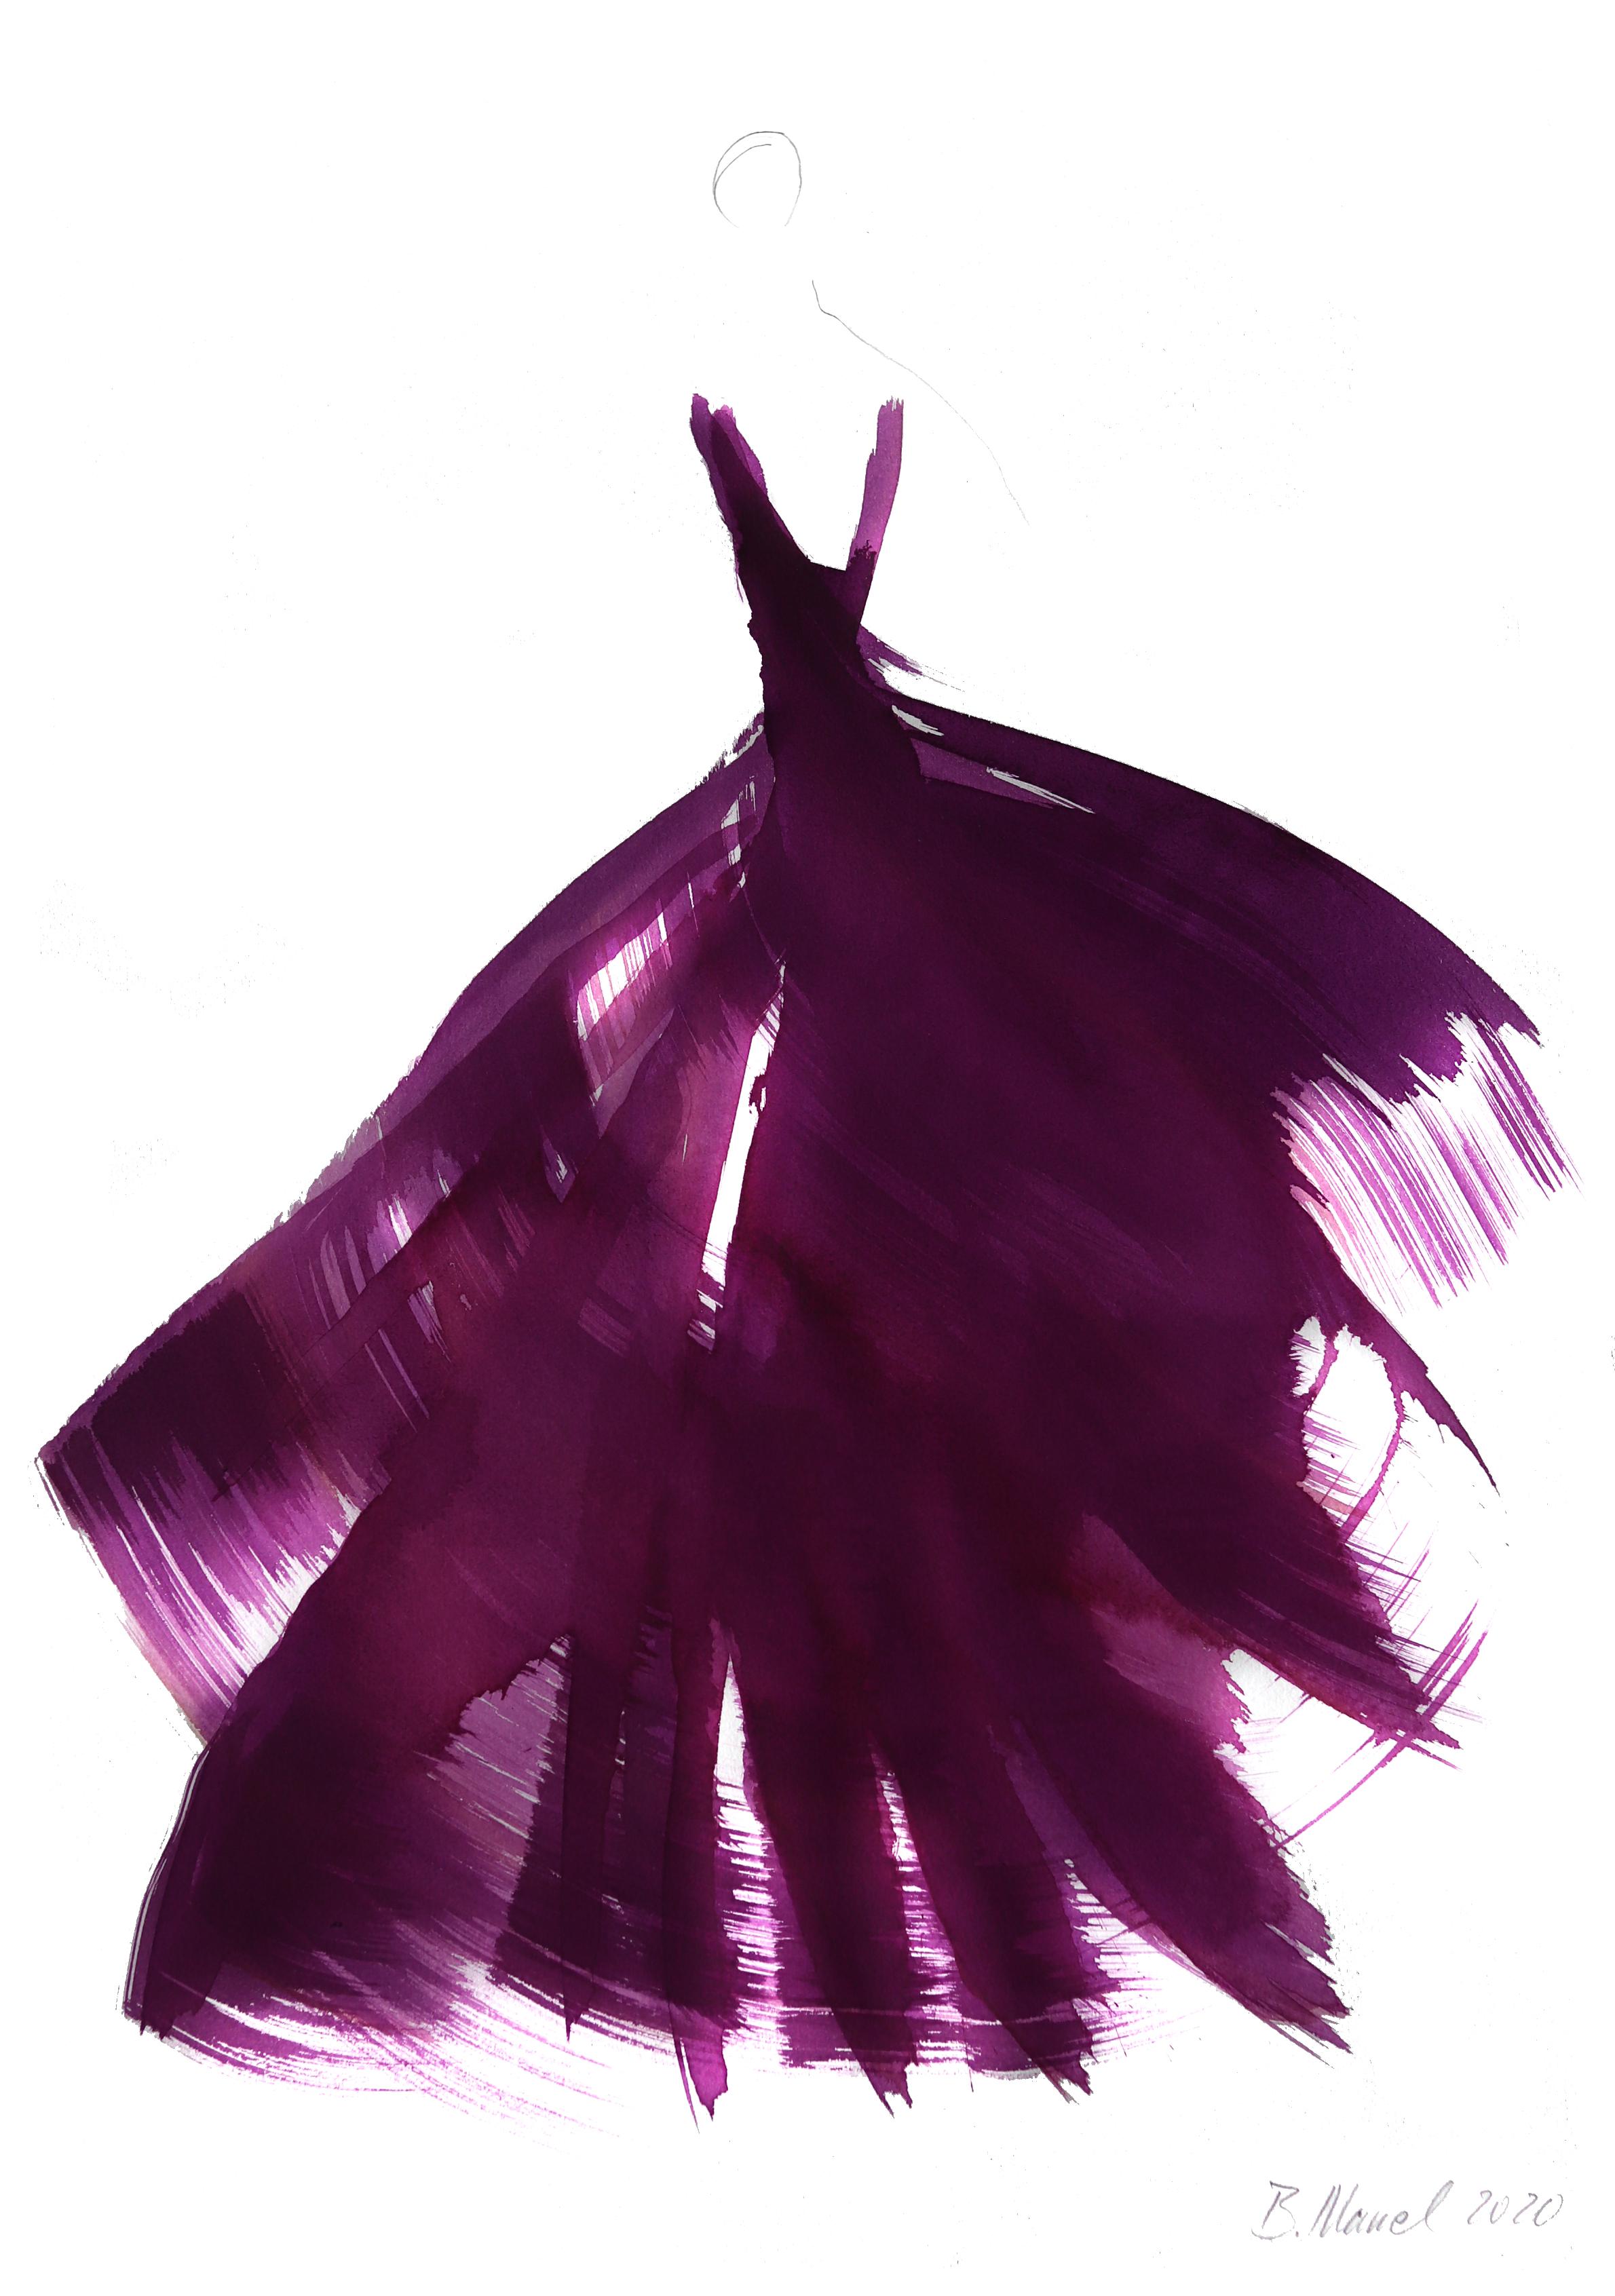 Bettina Mauel Abstract Painting - The Purple Dress 5 - Original Ink Artwork